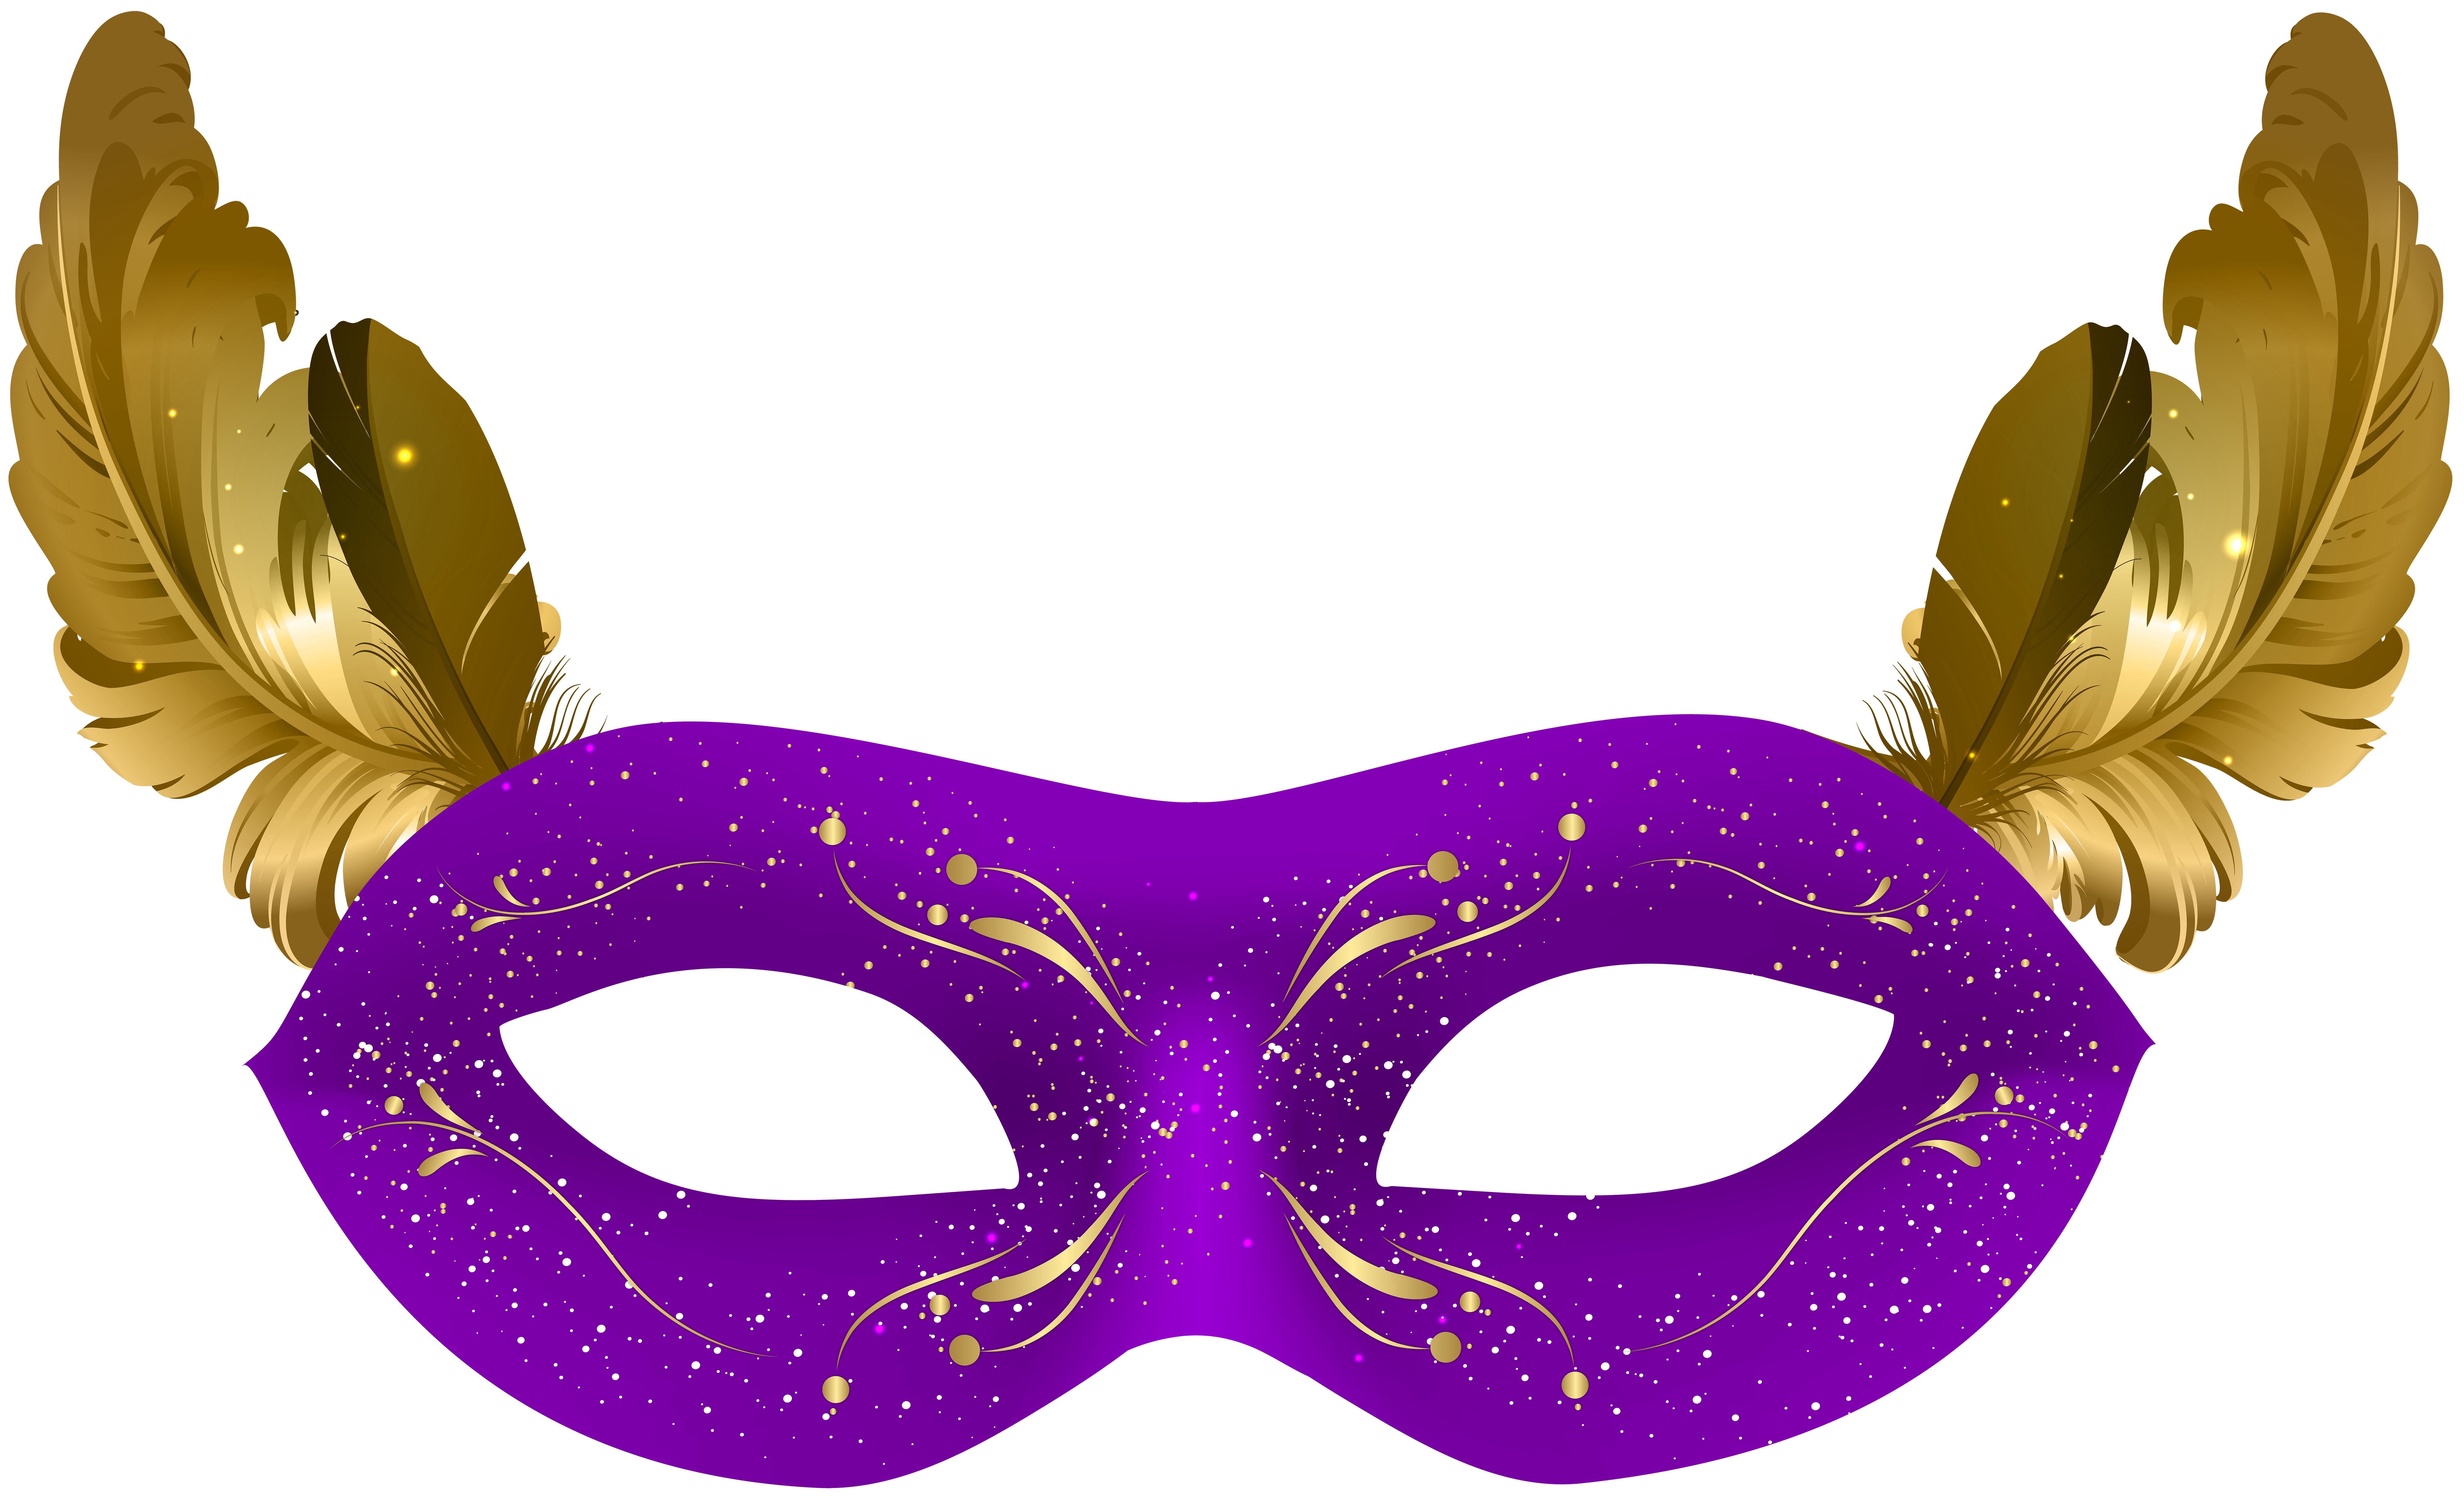 mask clipart purple